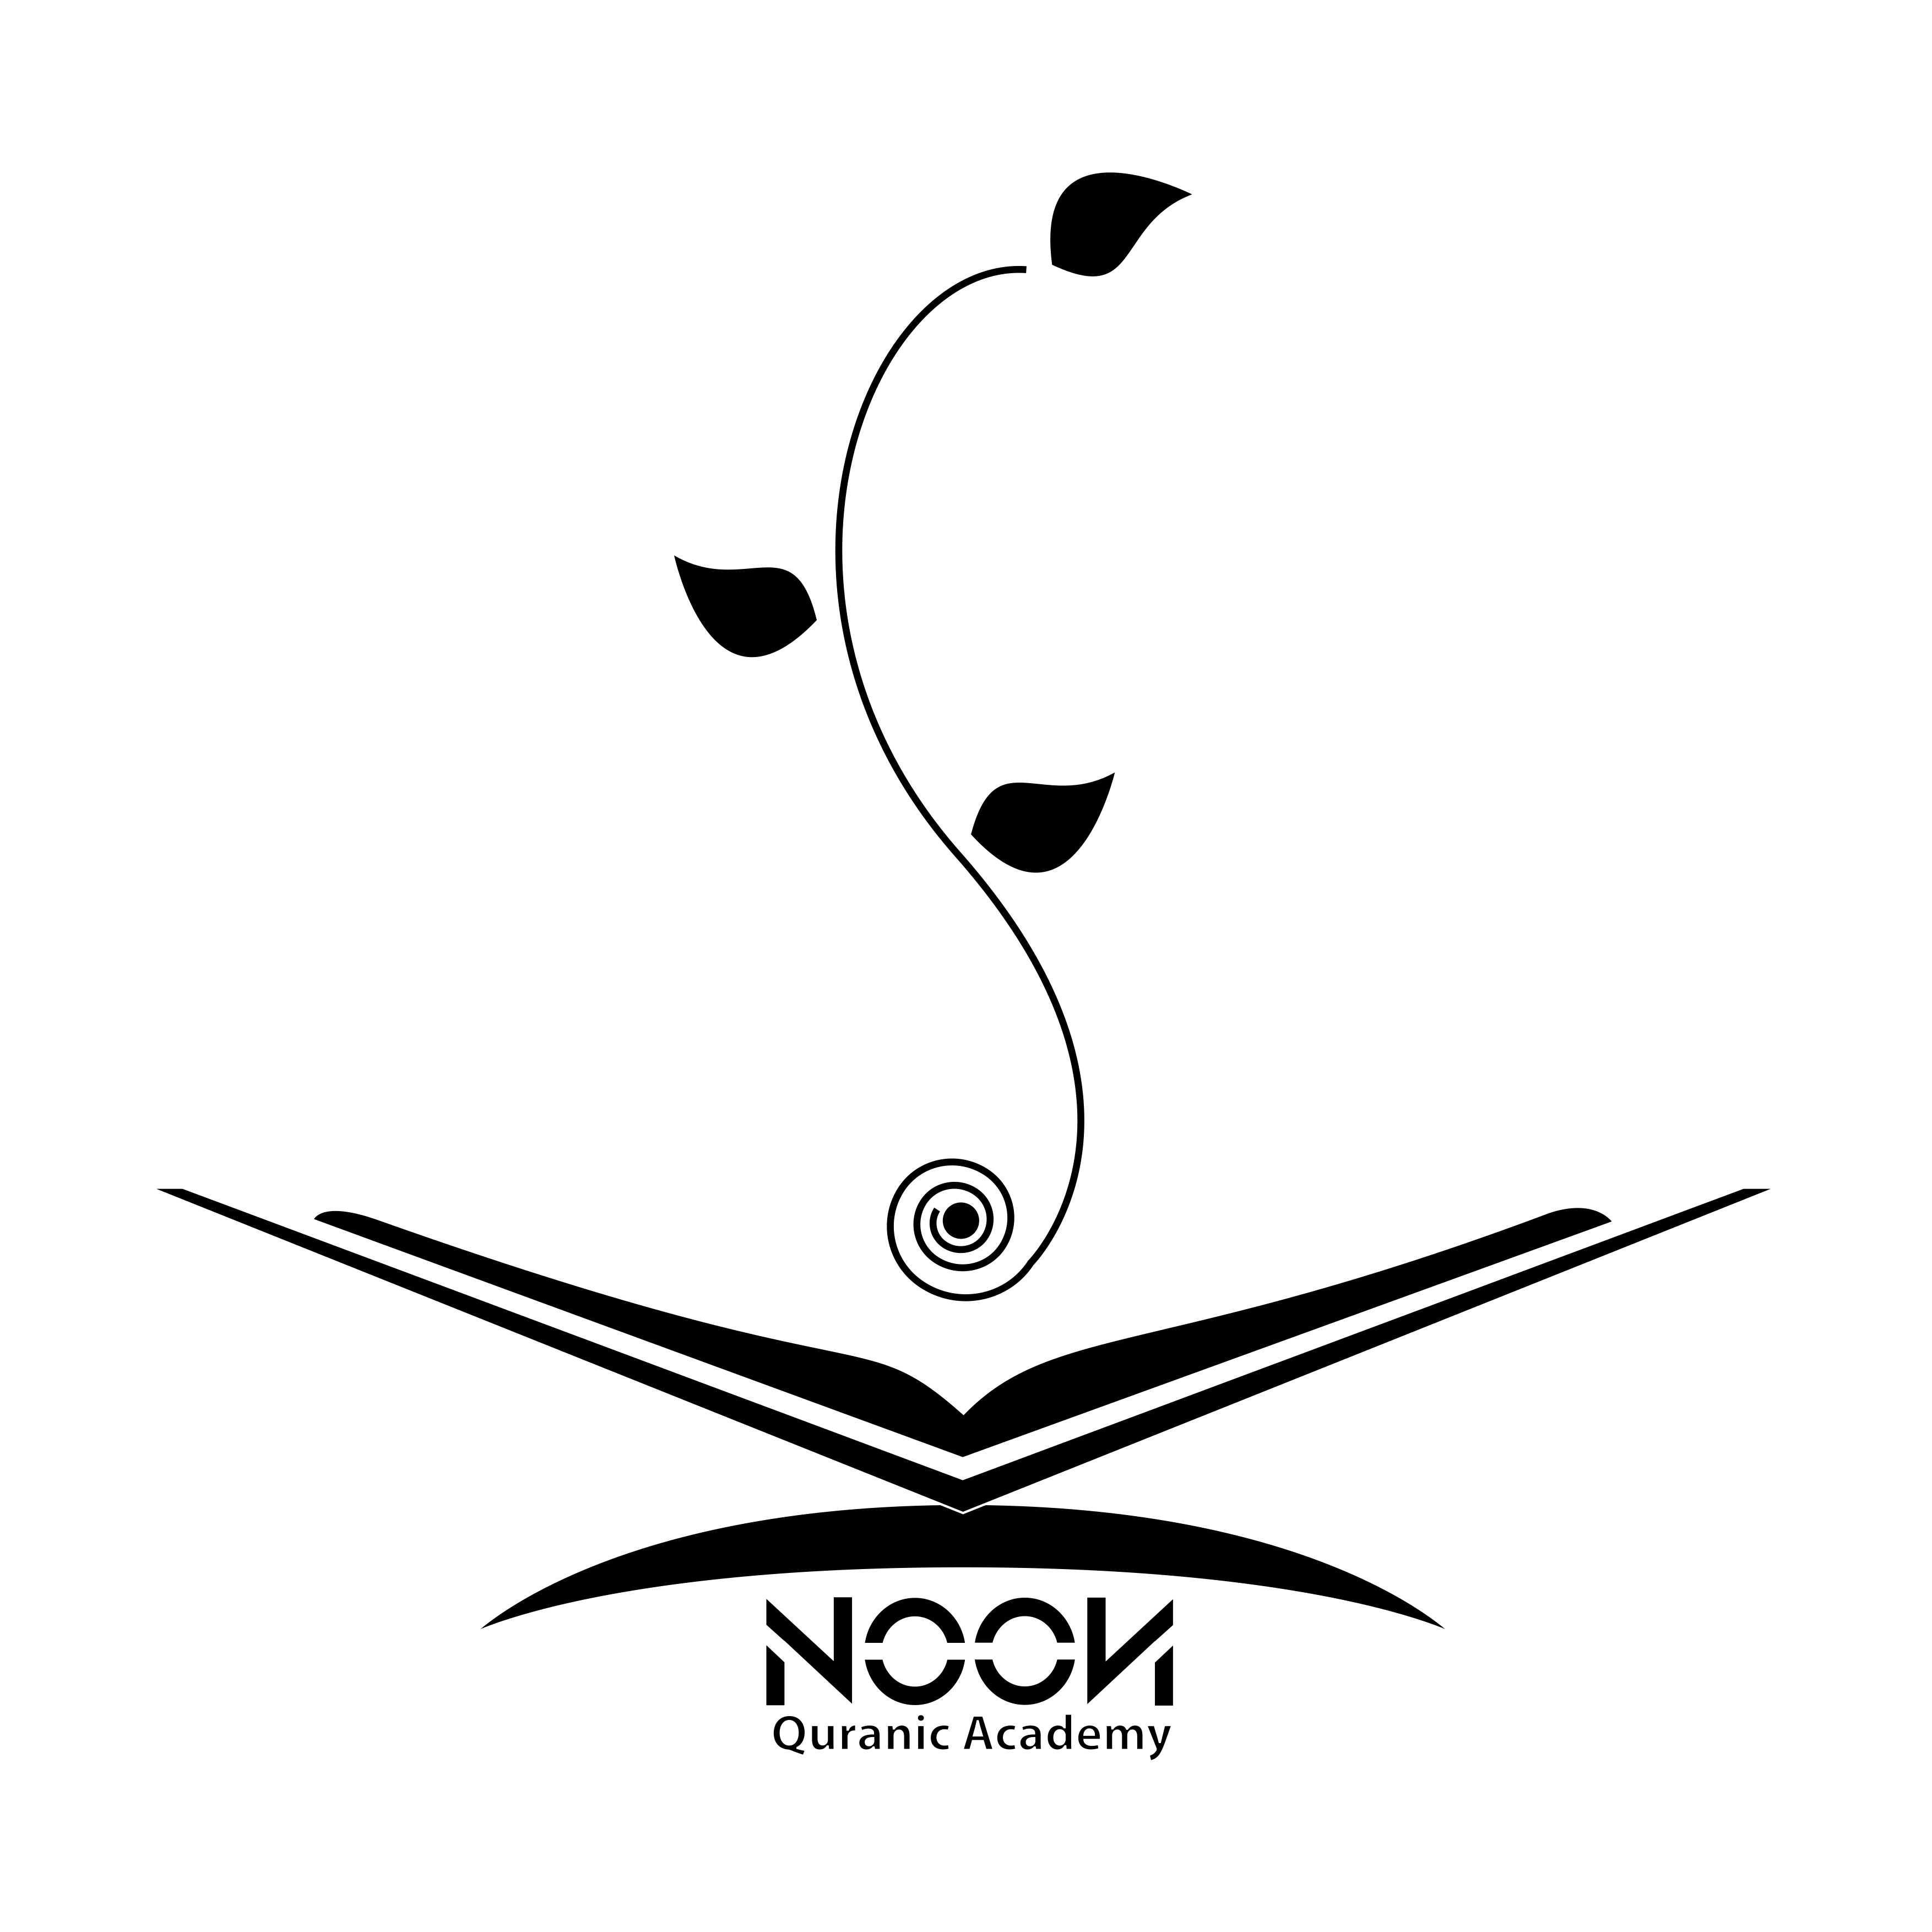 NooN Quranic Academy 5:00pm - 8:30pm